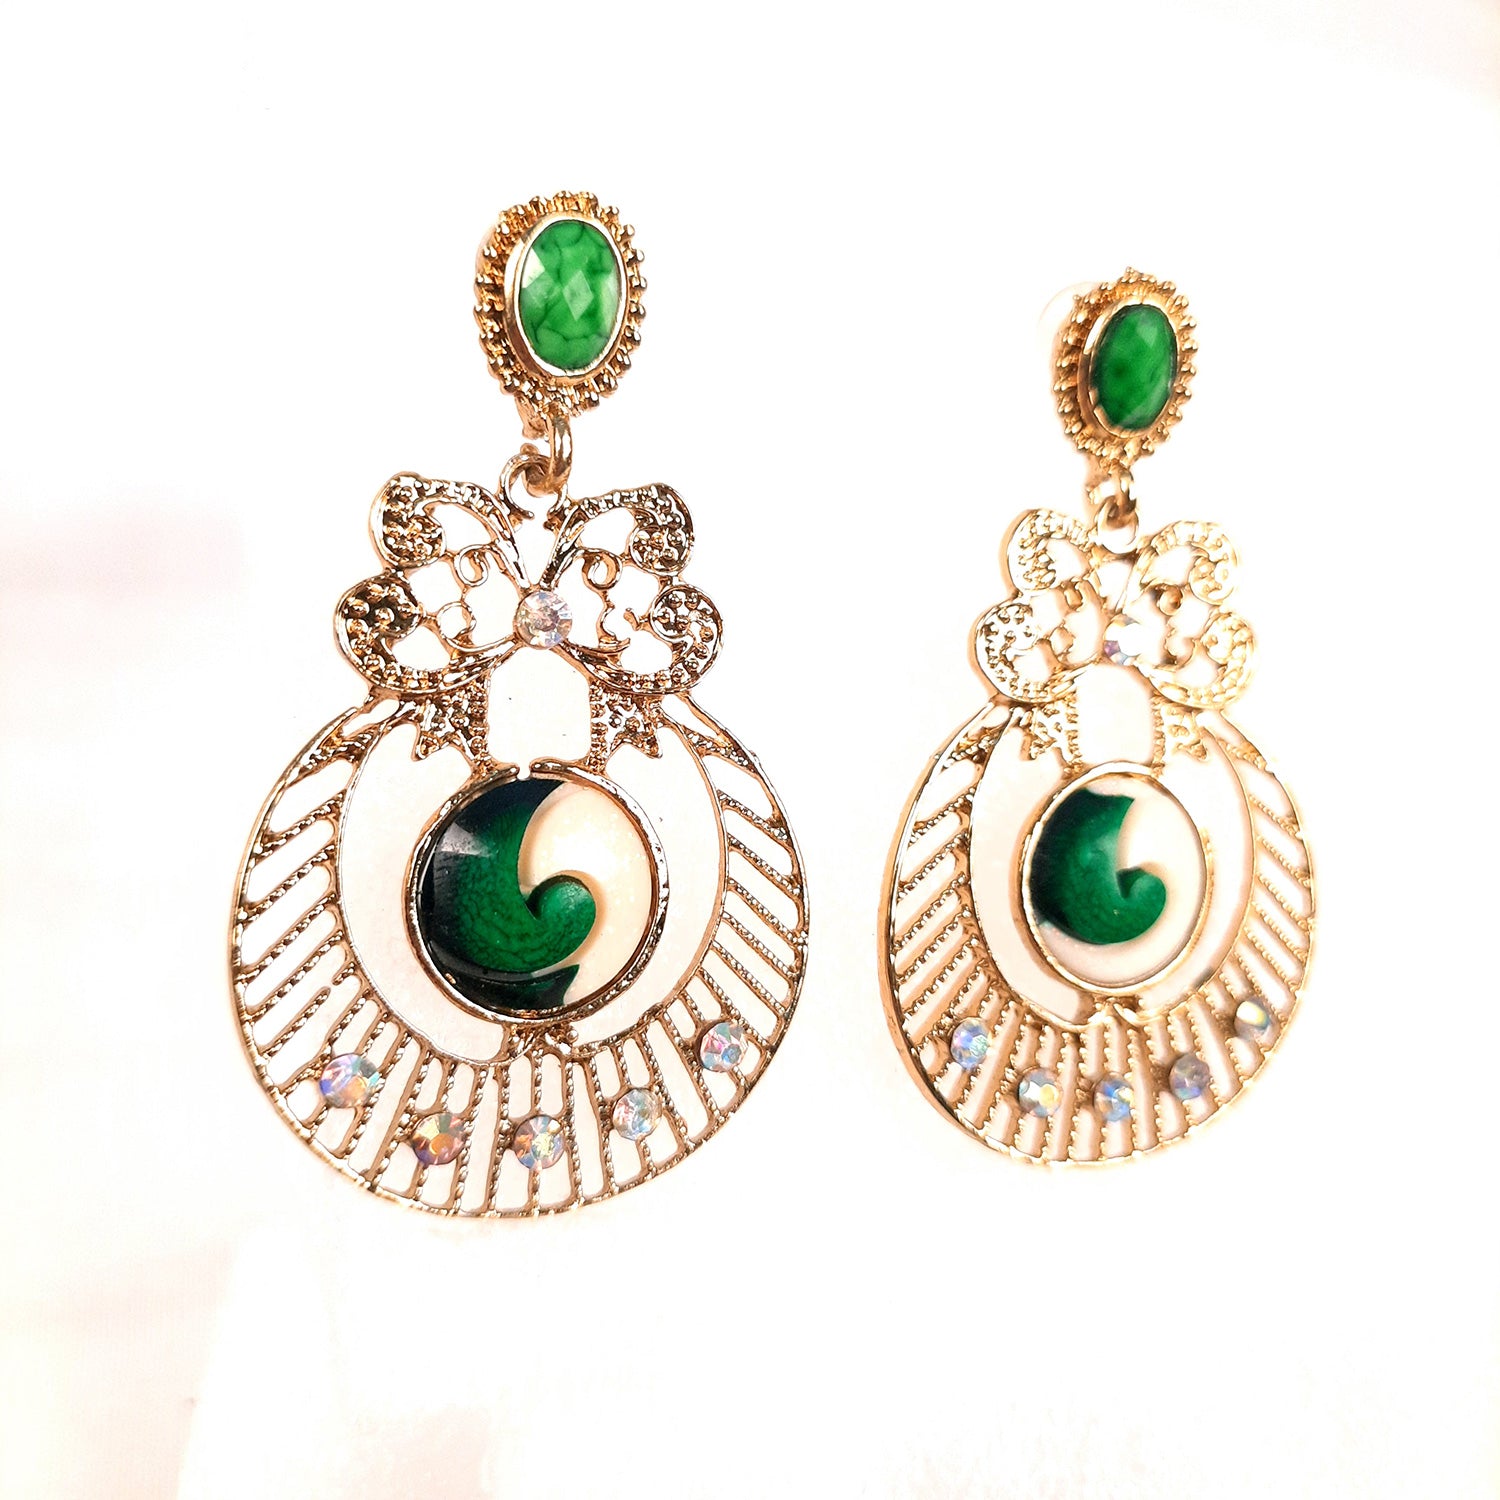 Earrings for Women & Girls | Drop and Dangler Earrings | Latest Stylish Fashion Jewellery | Gift for Her - Apkamart